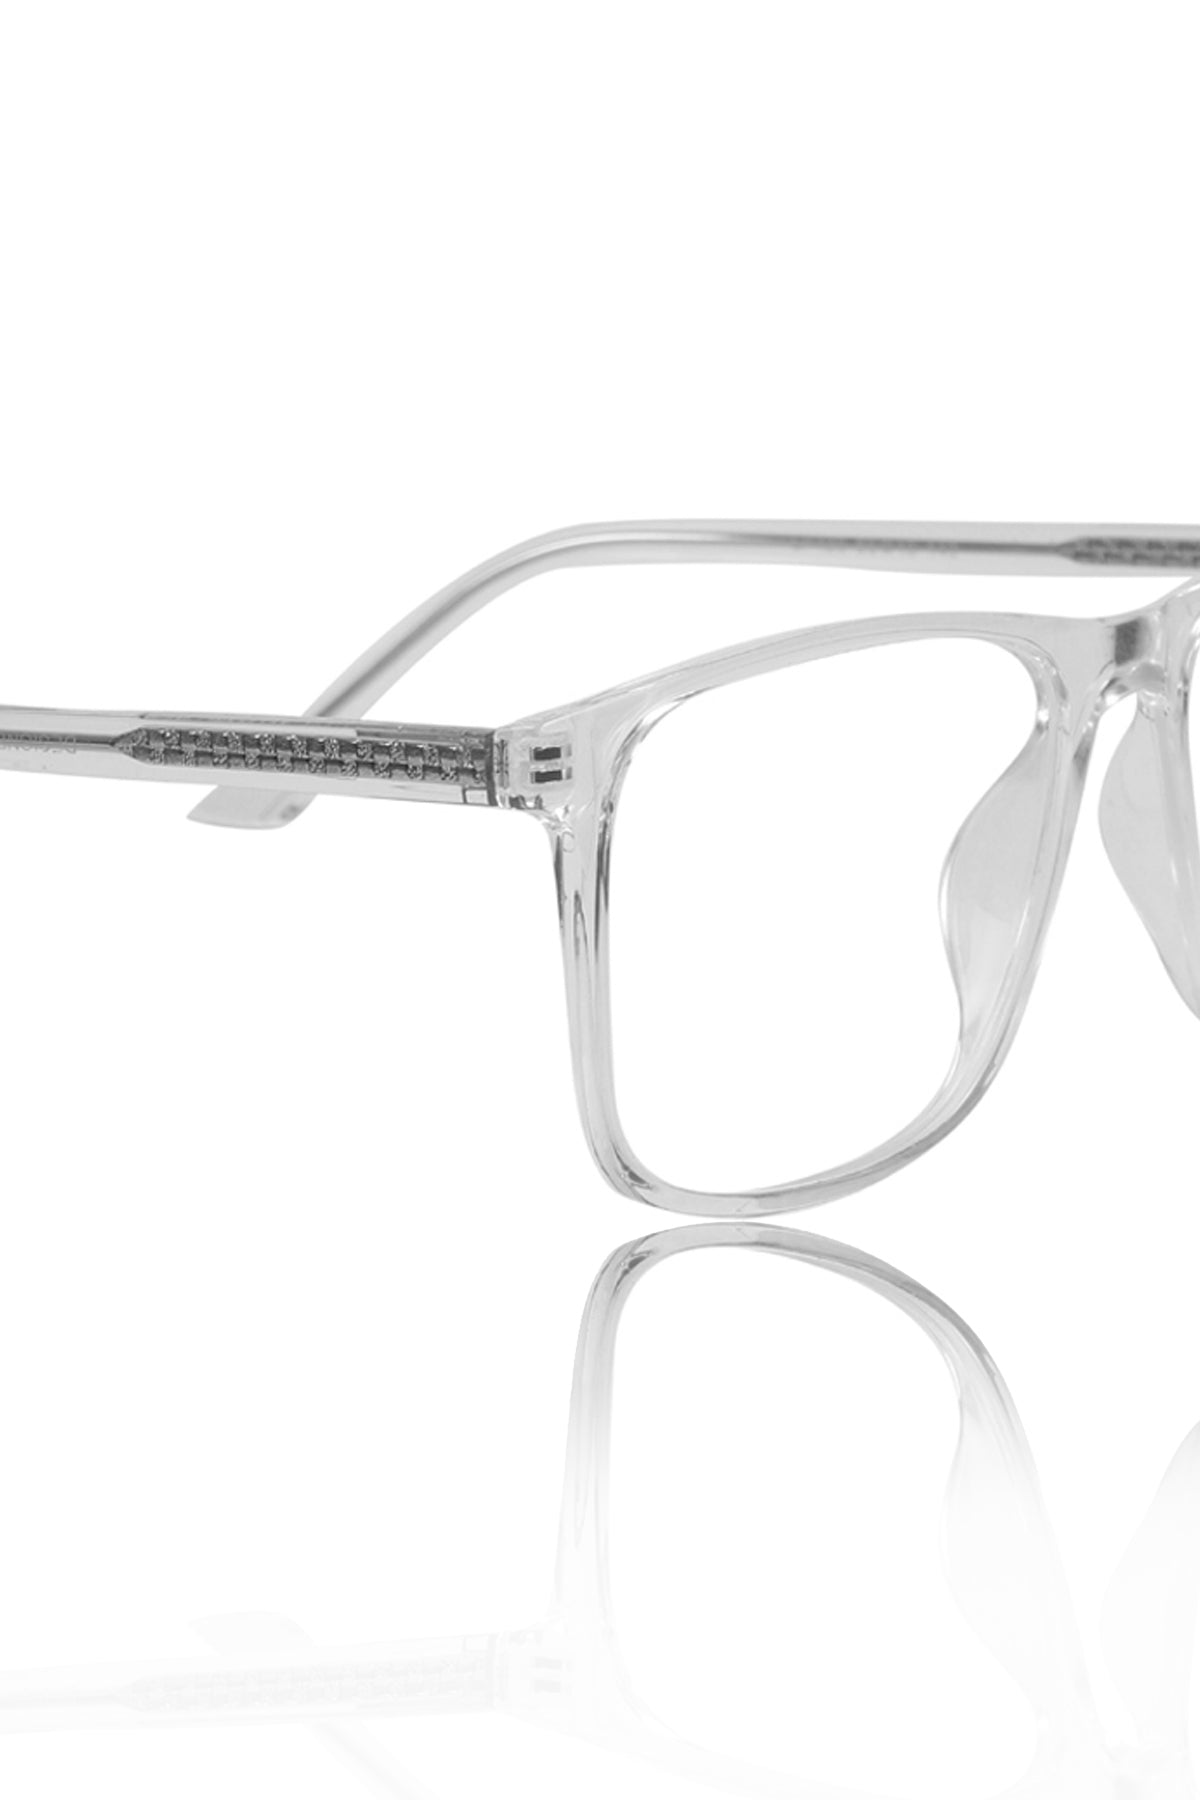 Jodykoes® Premium Series Pure Acetate Sheet Rectangle Eyewear Frame | Modern Fashionable Trending Spectacle Eyeglasses For Men and Women (Crystal Transparent) - Jodykoes ®